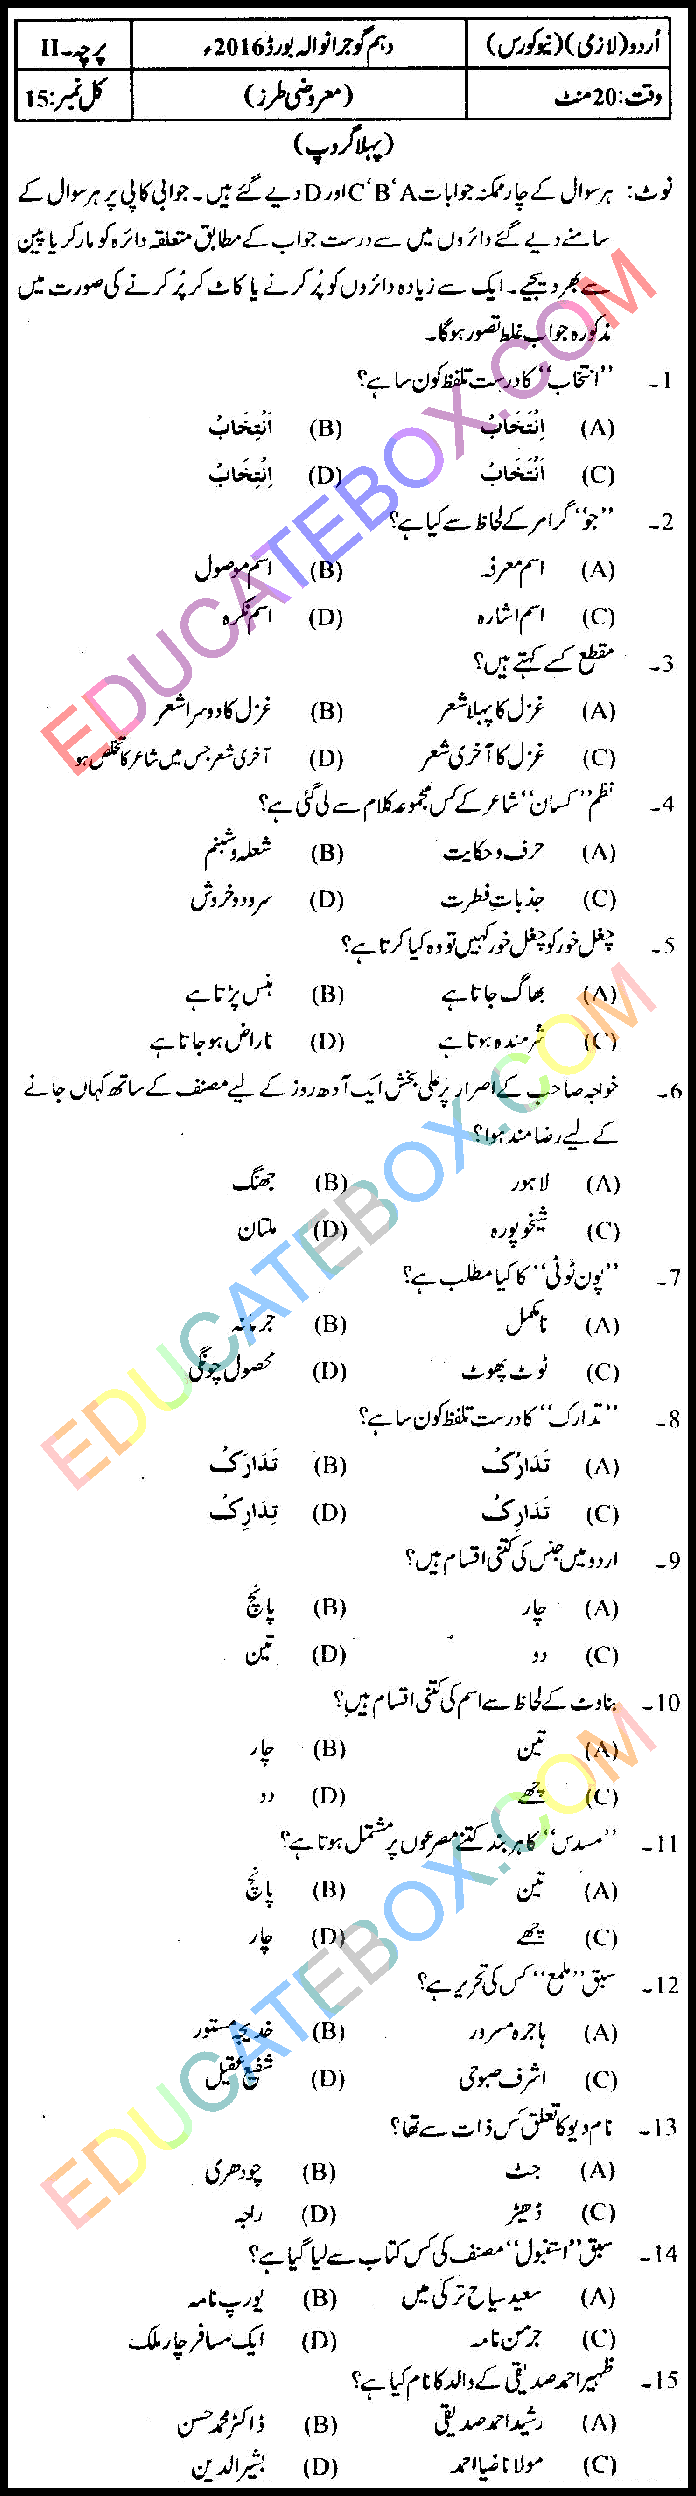 Past Paper 10th Class Urdu Gujranwala Board 2016 Group 1 Objective Type اپ ٹو ڈیٹ پیپراردو 2016 پہلا گروپ جماعت دہم گوجرانوالہ بورڈ معروضی طرز